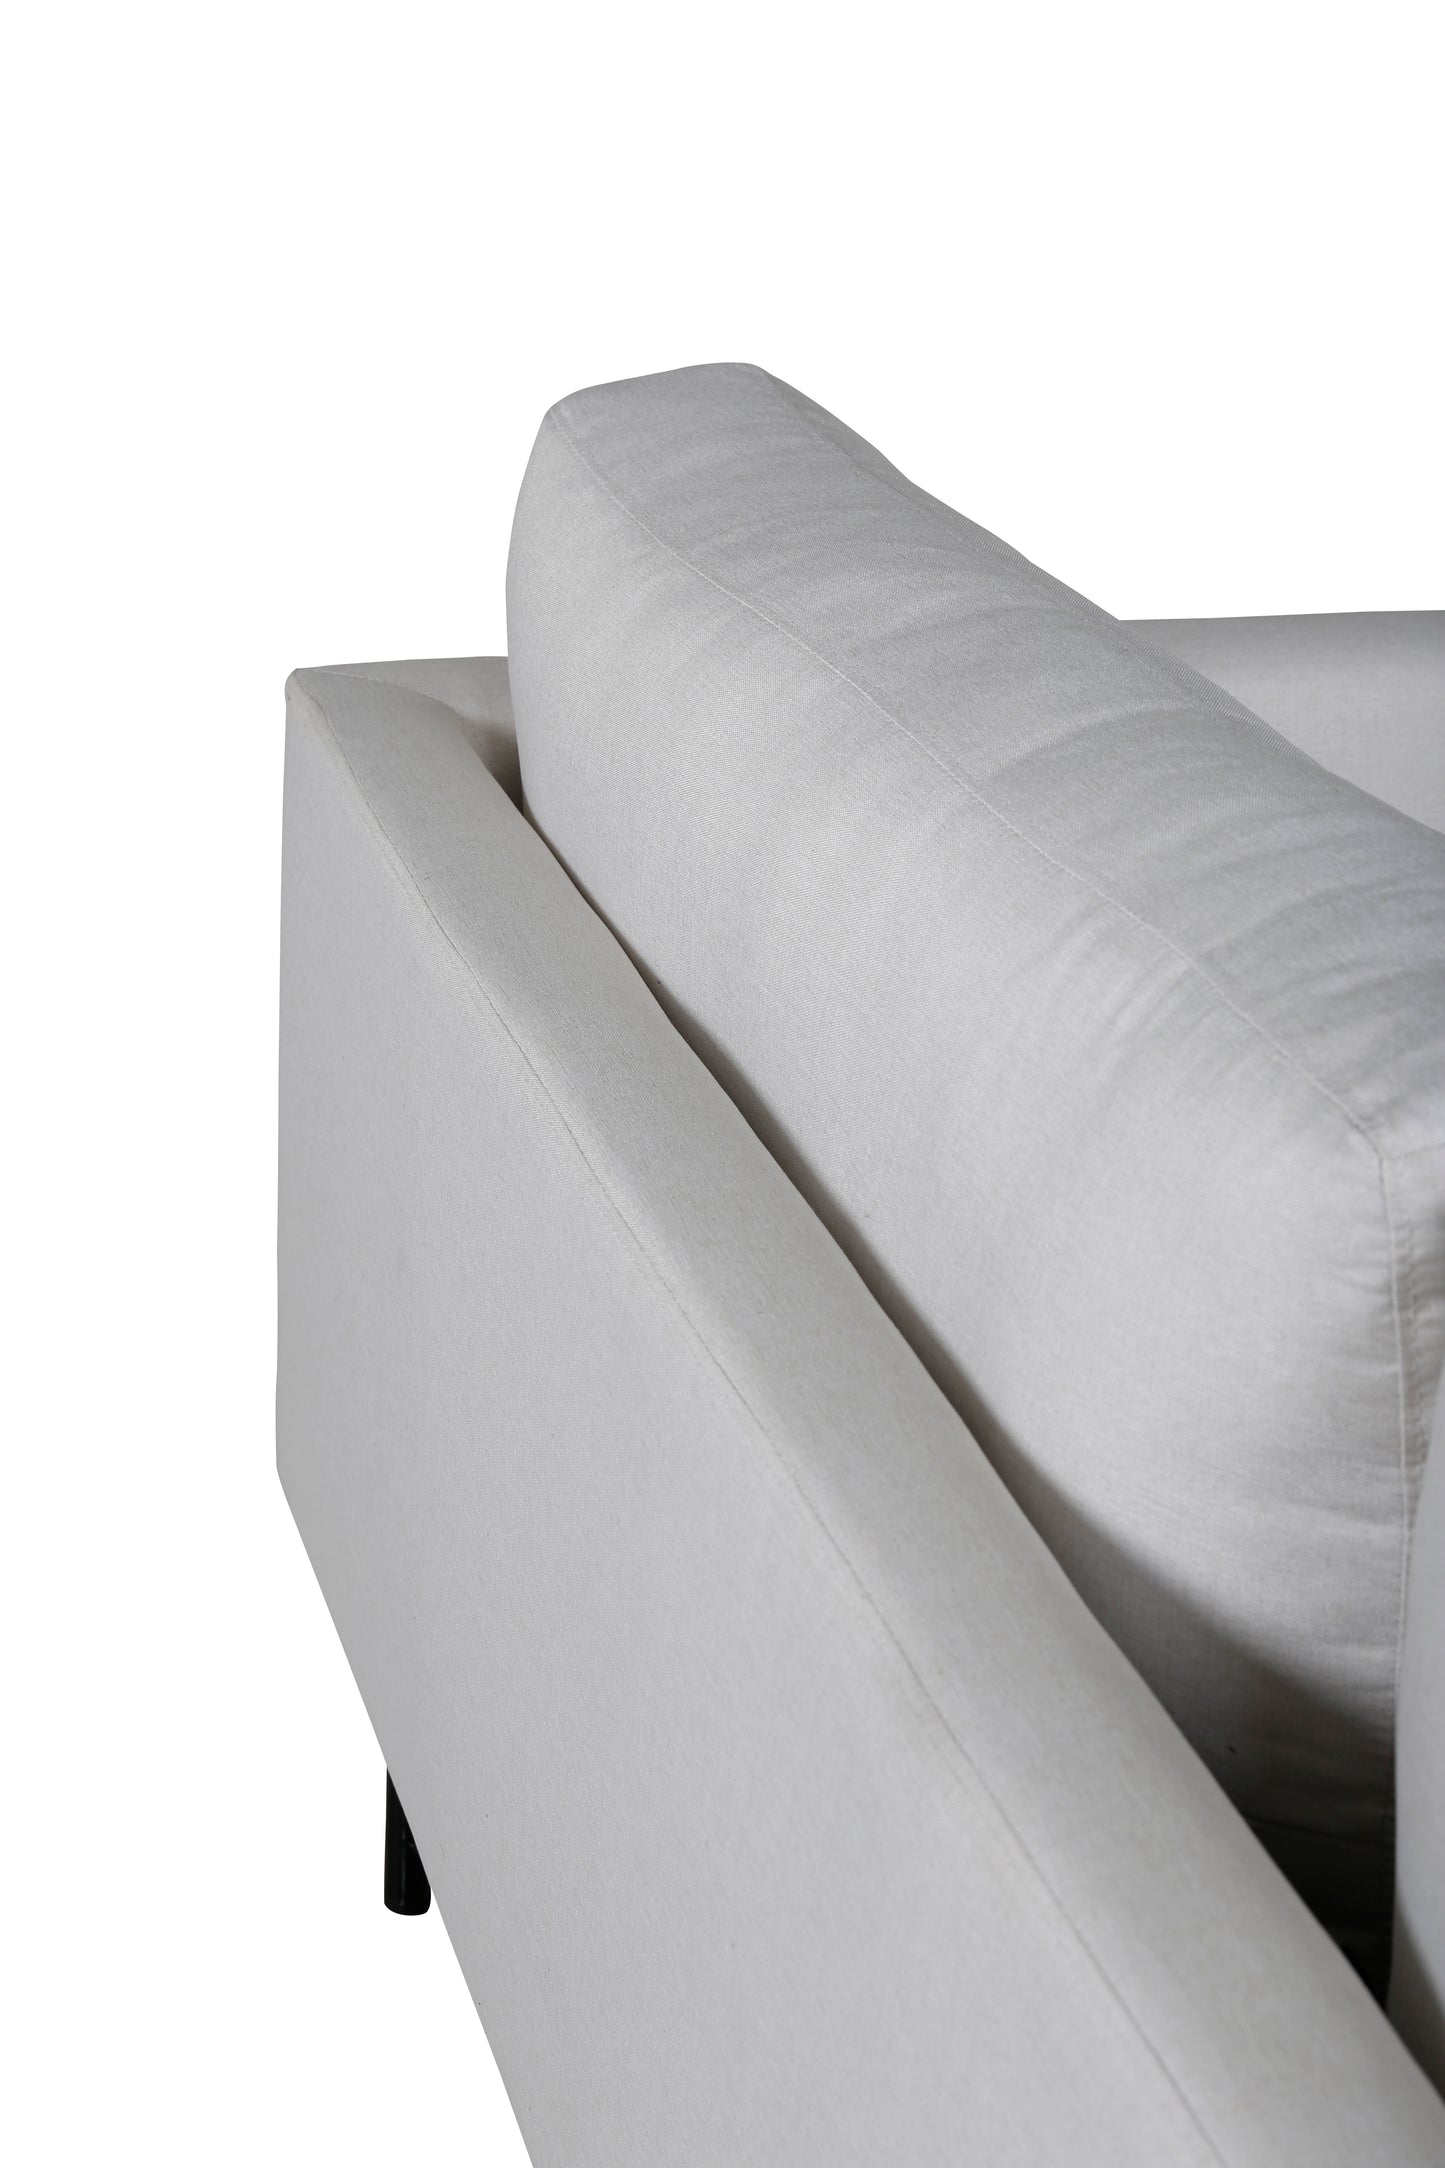 Venture Design | Zoom 2-personers soffa - Svart / Ljus beige tyg